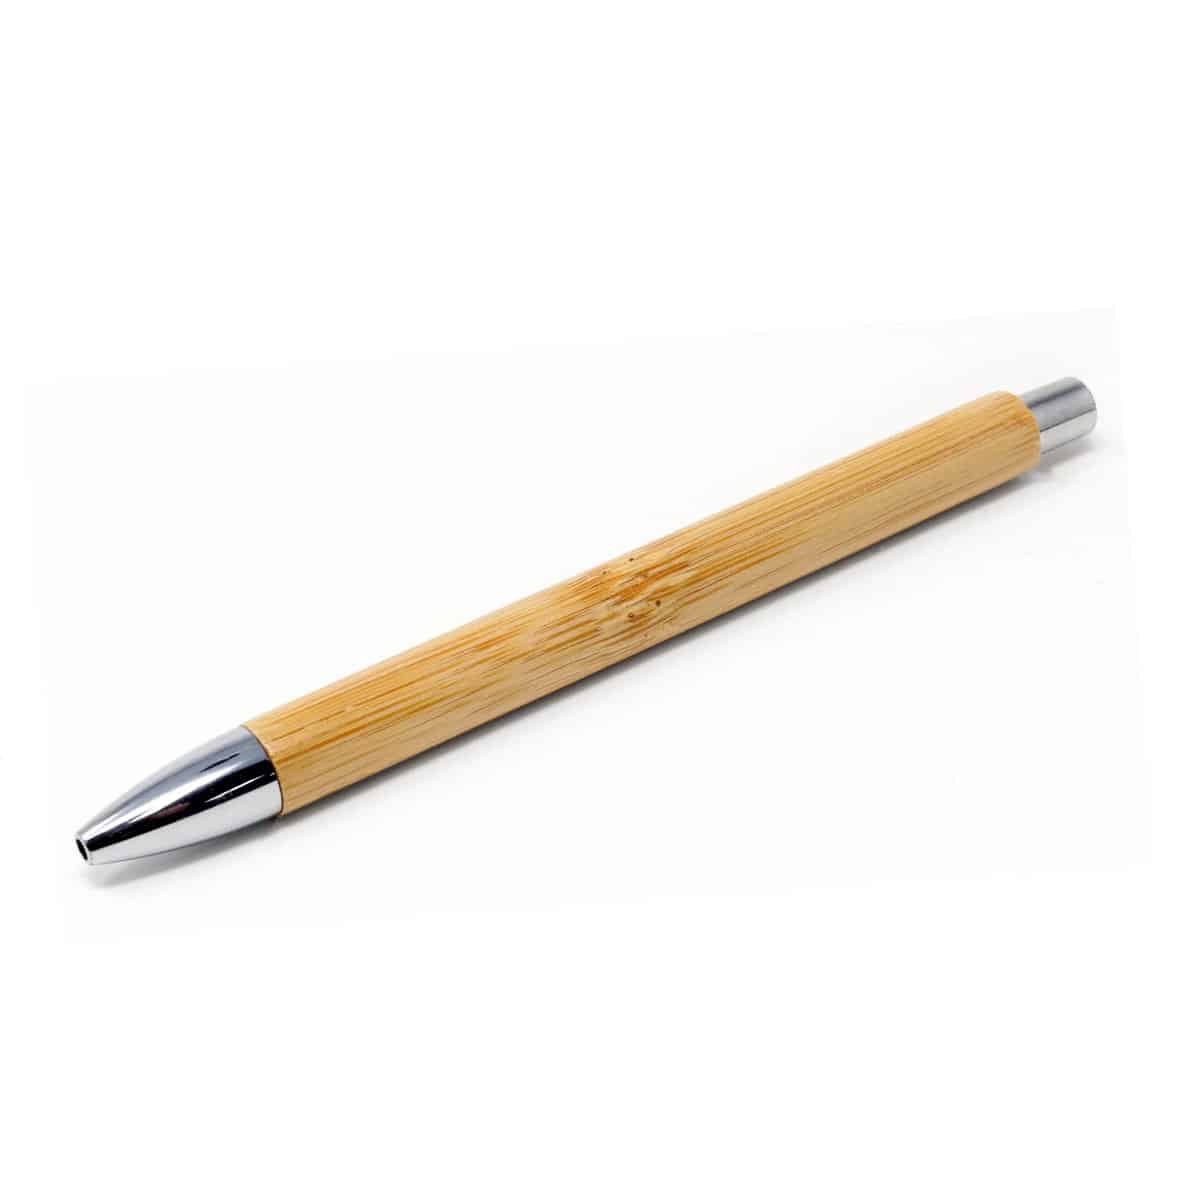 Bamboo ink pen